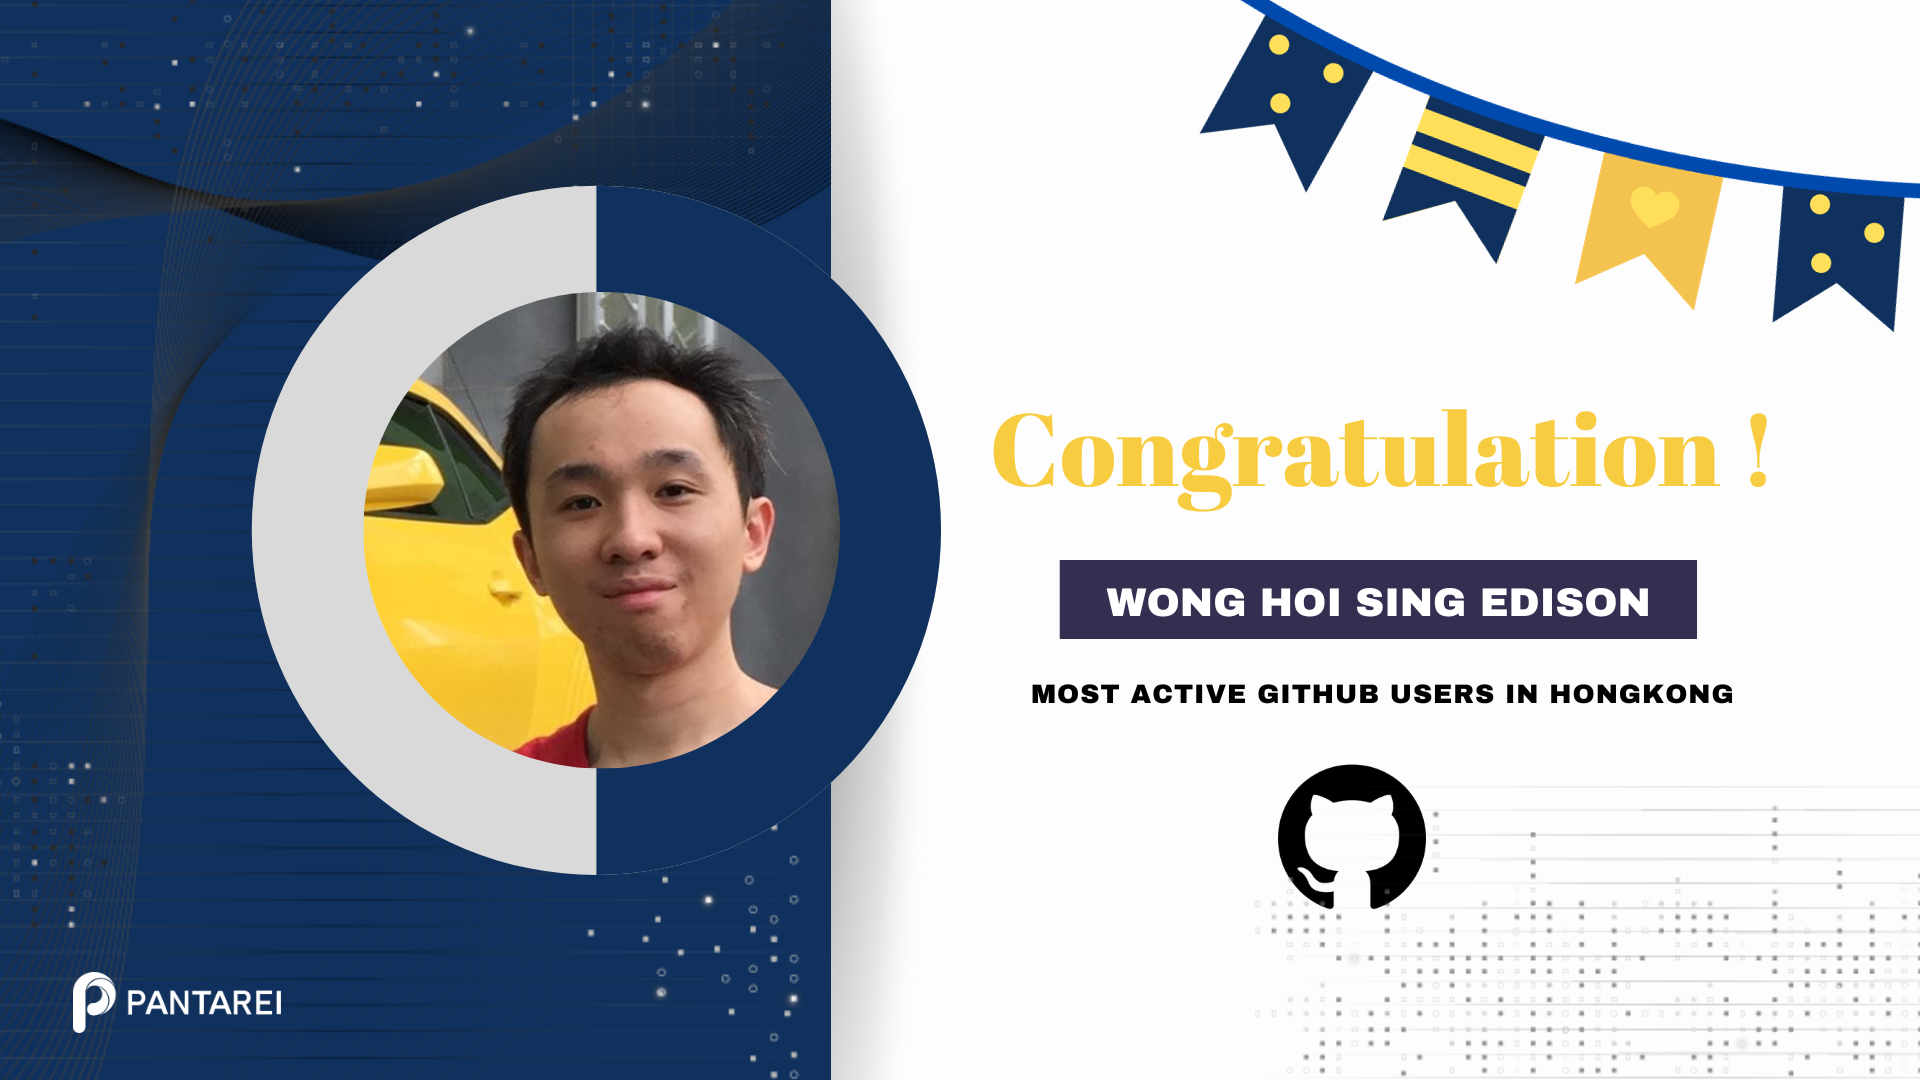 Most active GitHub users in Hongkong